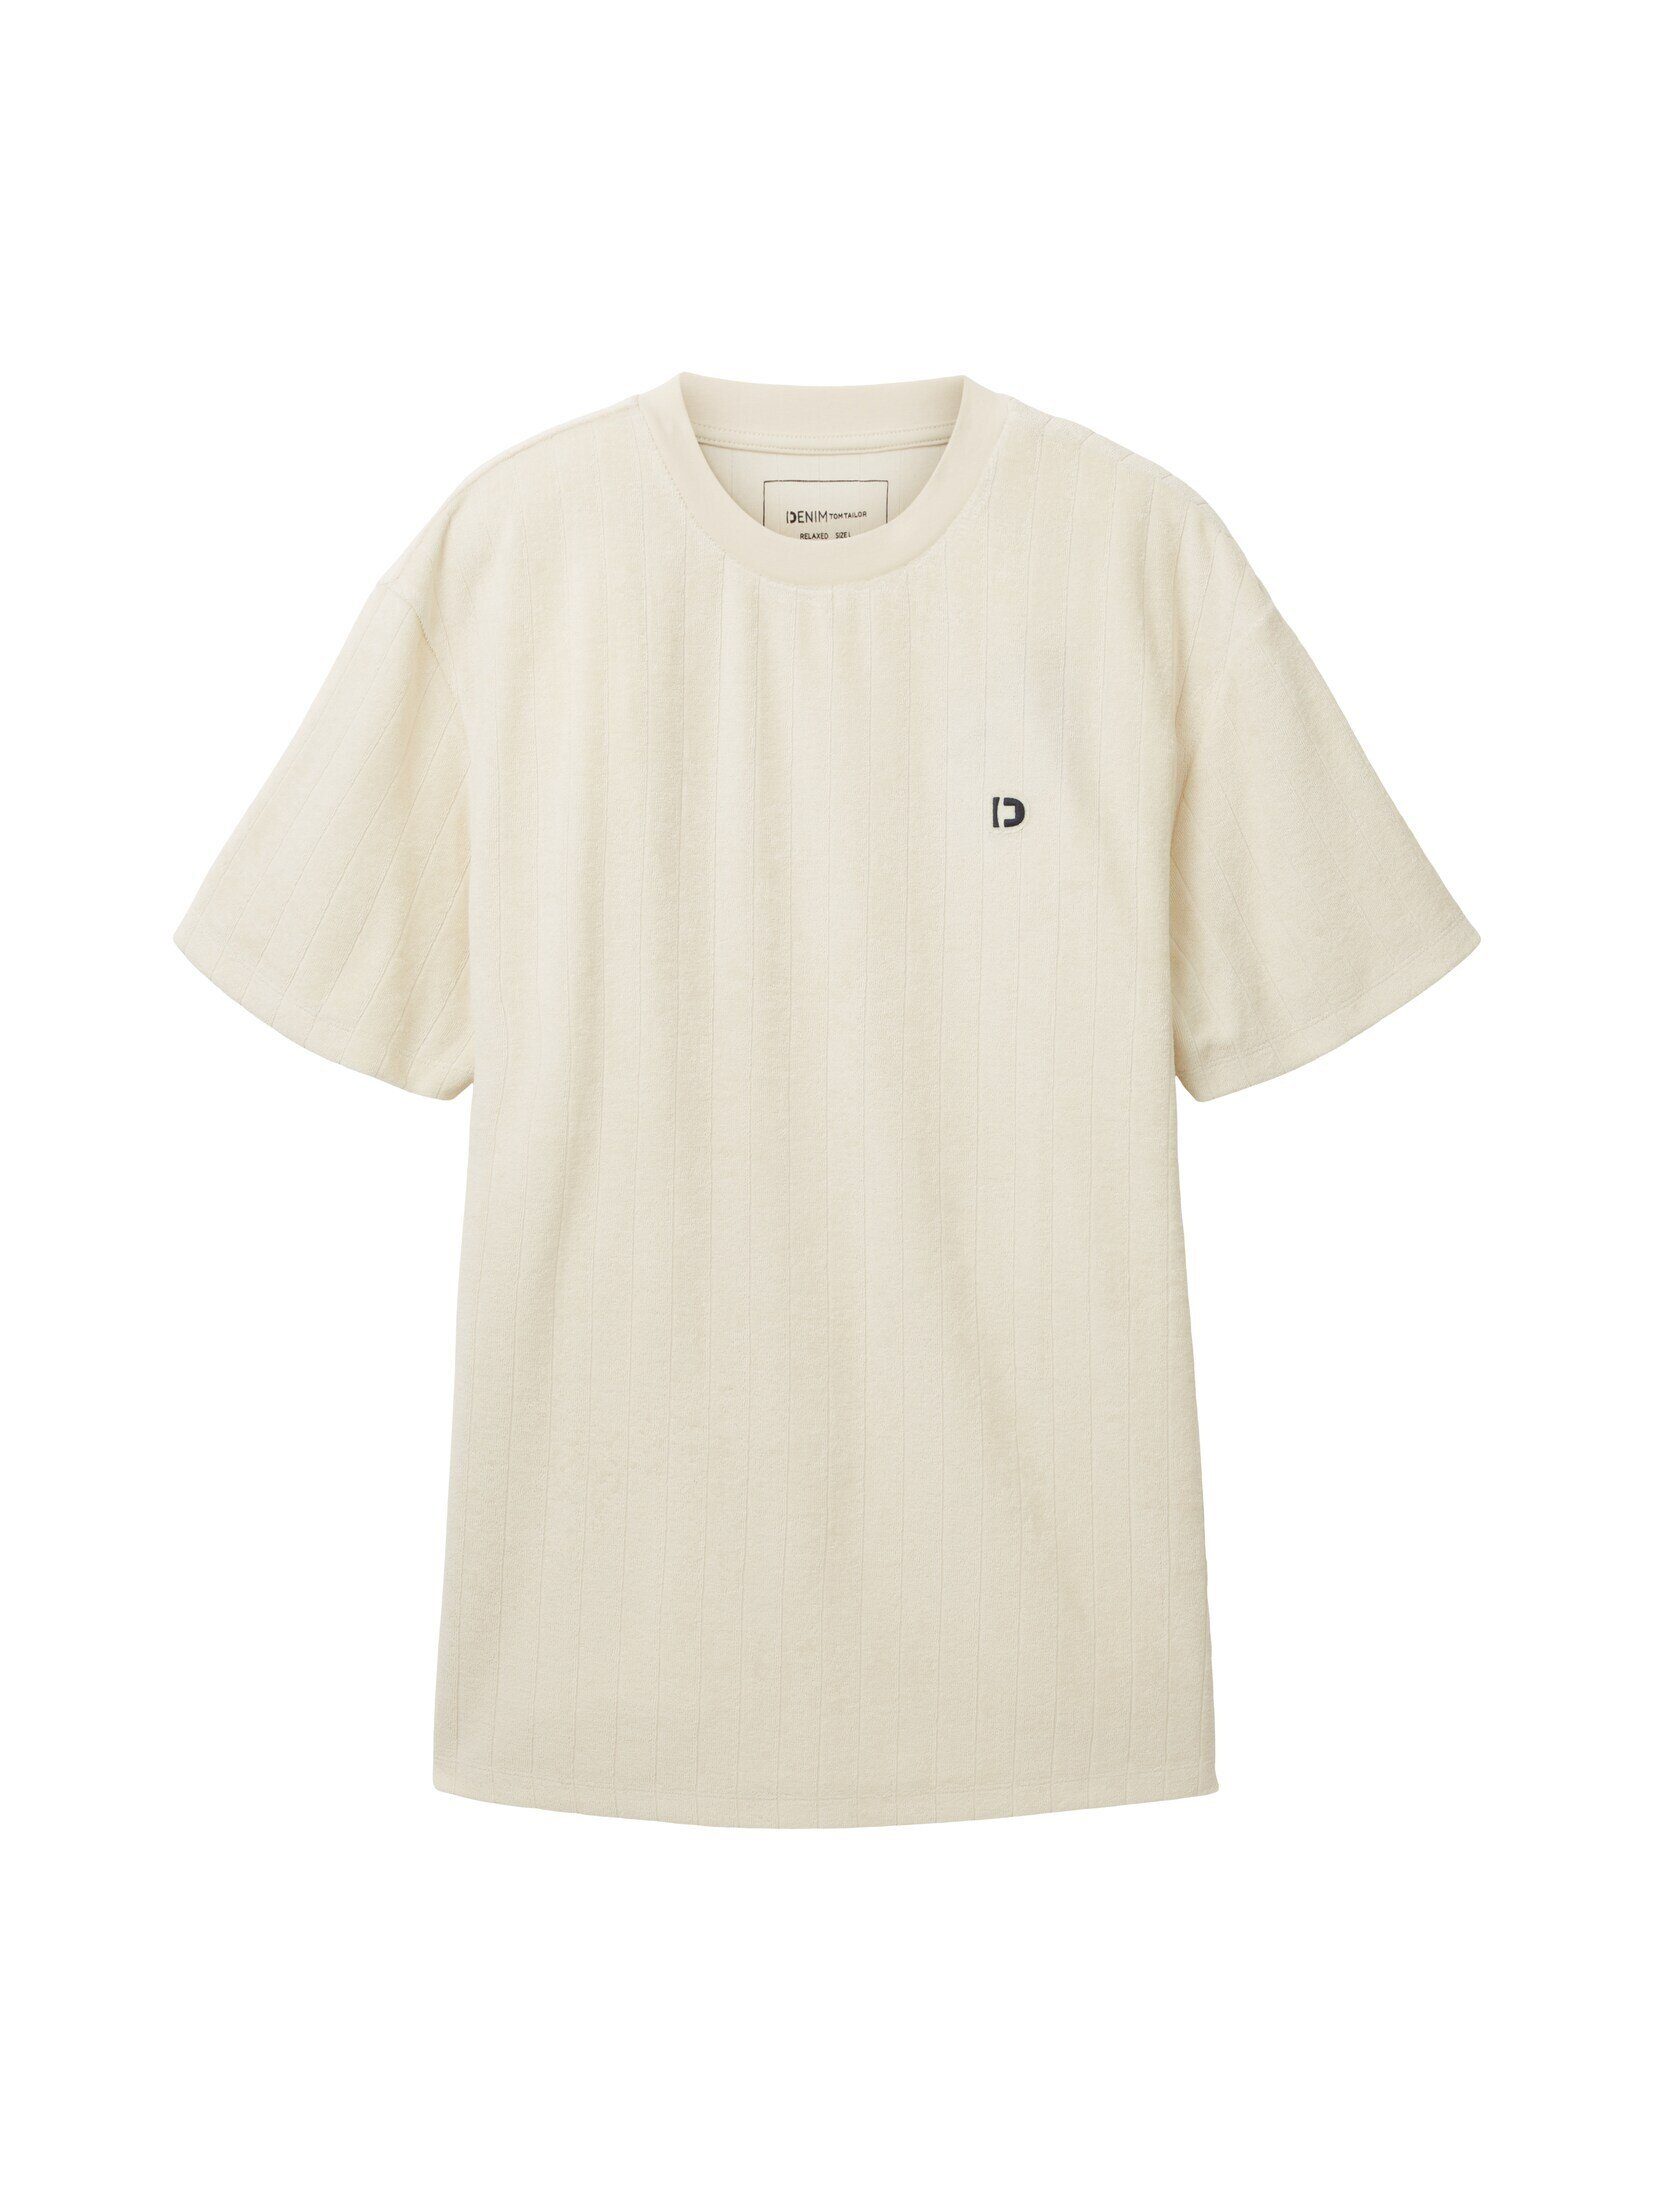 TOM TAILOR Denim T-Shirt jacquard aus Frottee Basic towelling T-Shirt stripe